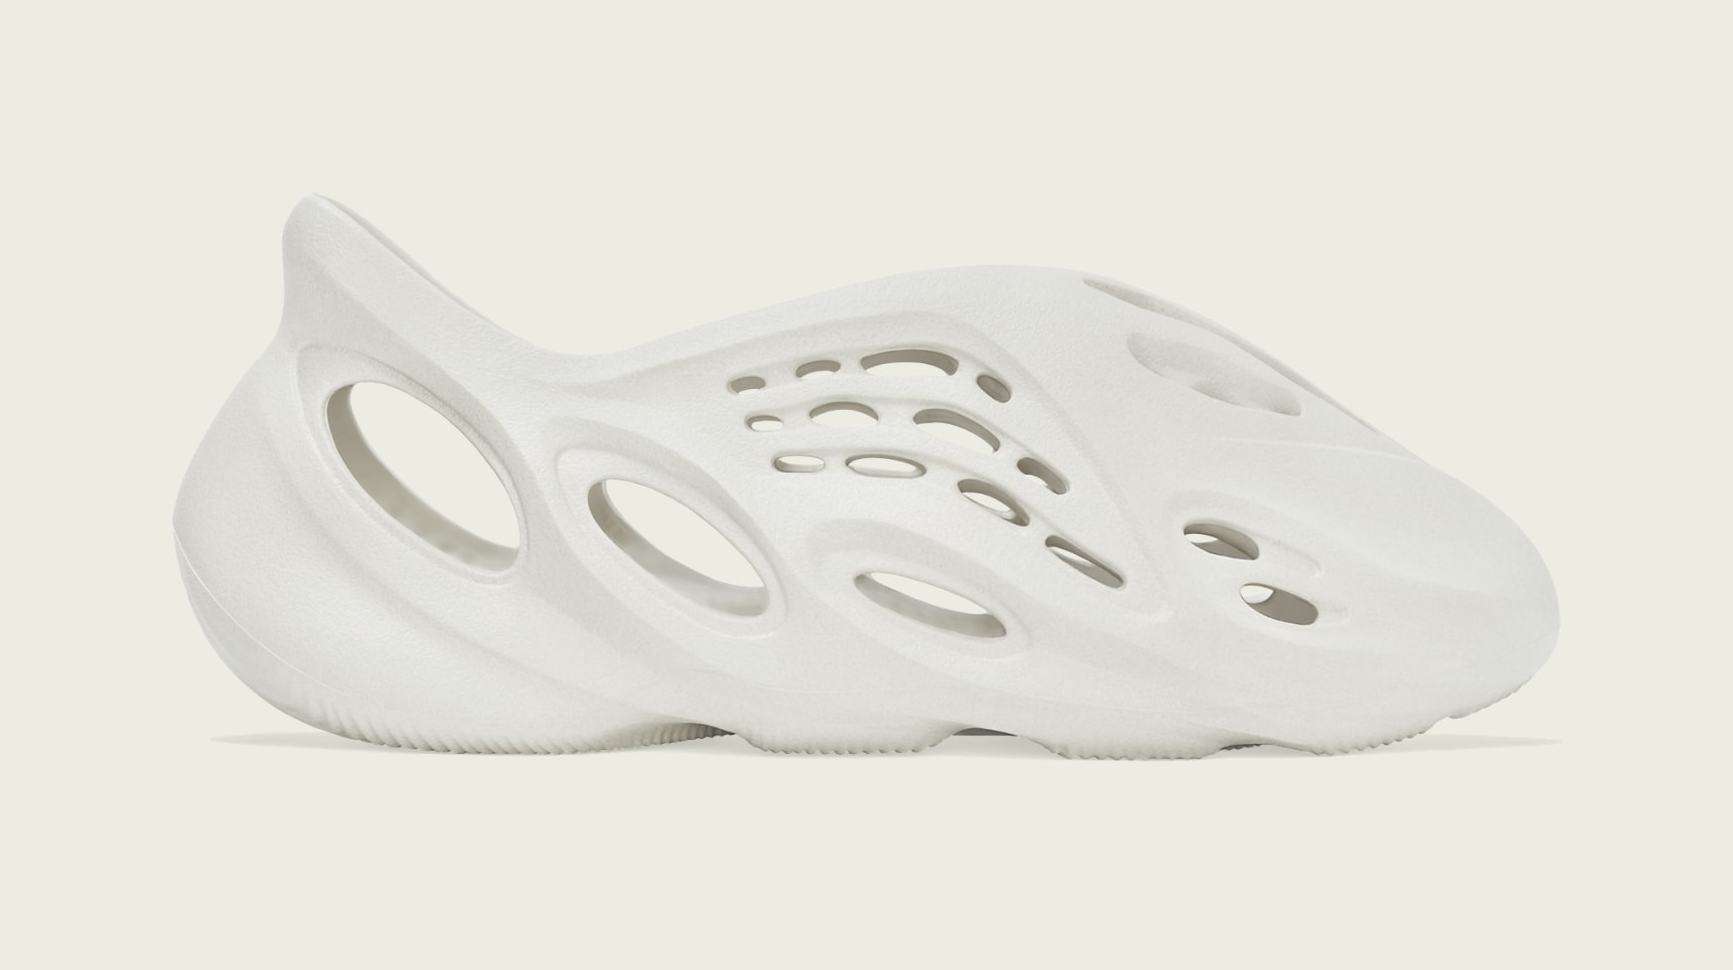 Adidas Yeezy Foam Runner &#x27;Sand&#x27; FY4567 Lateral